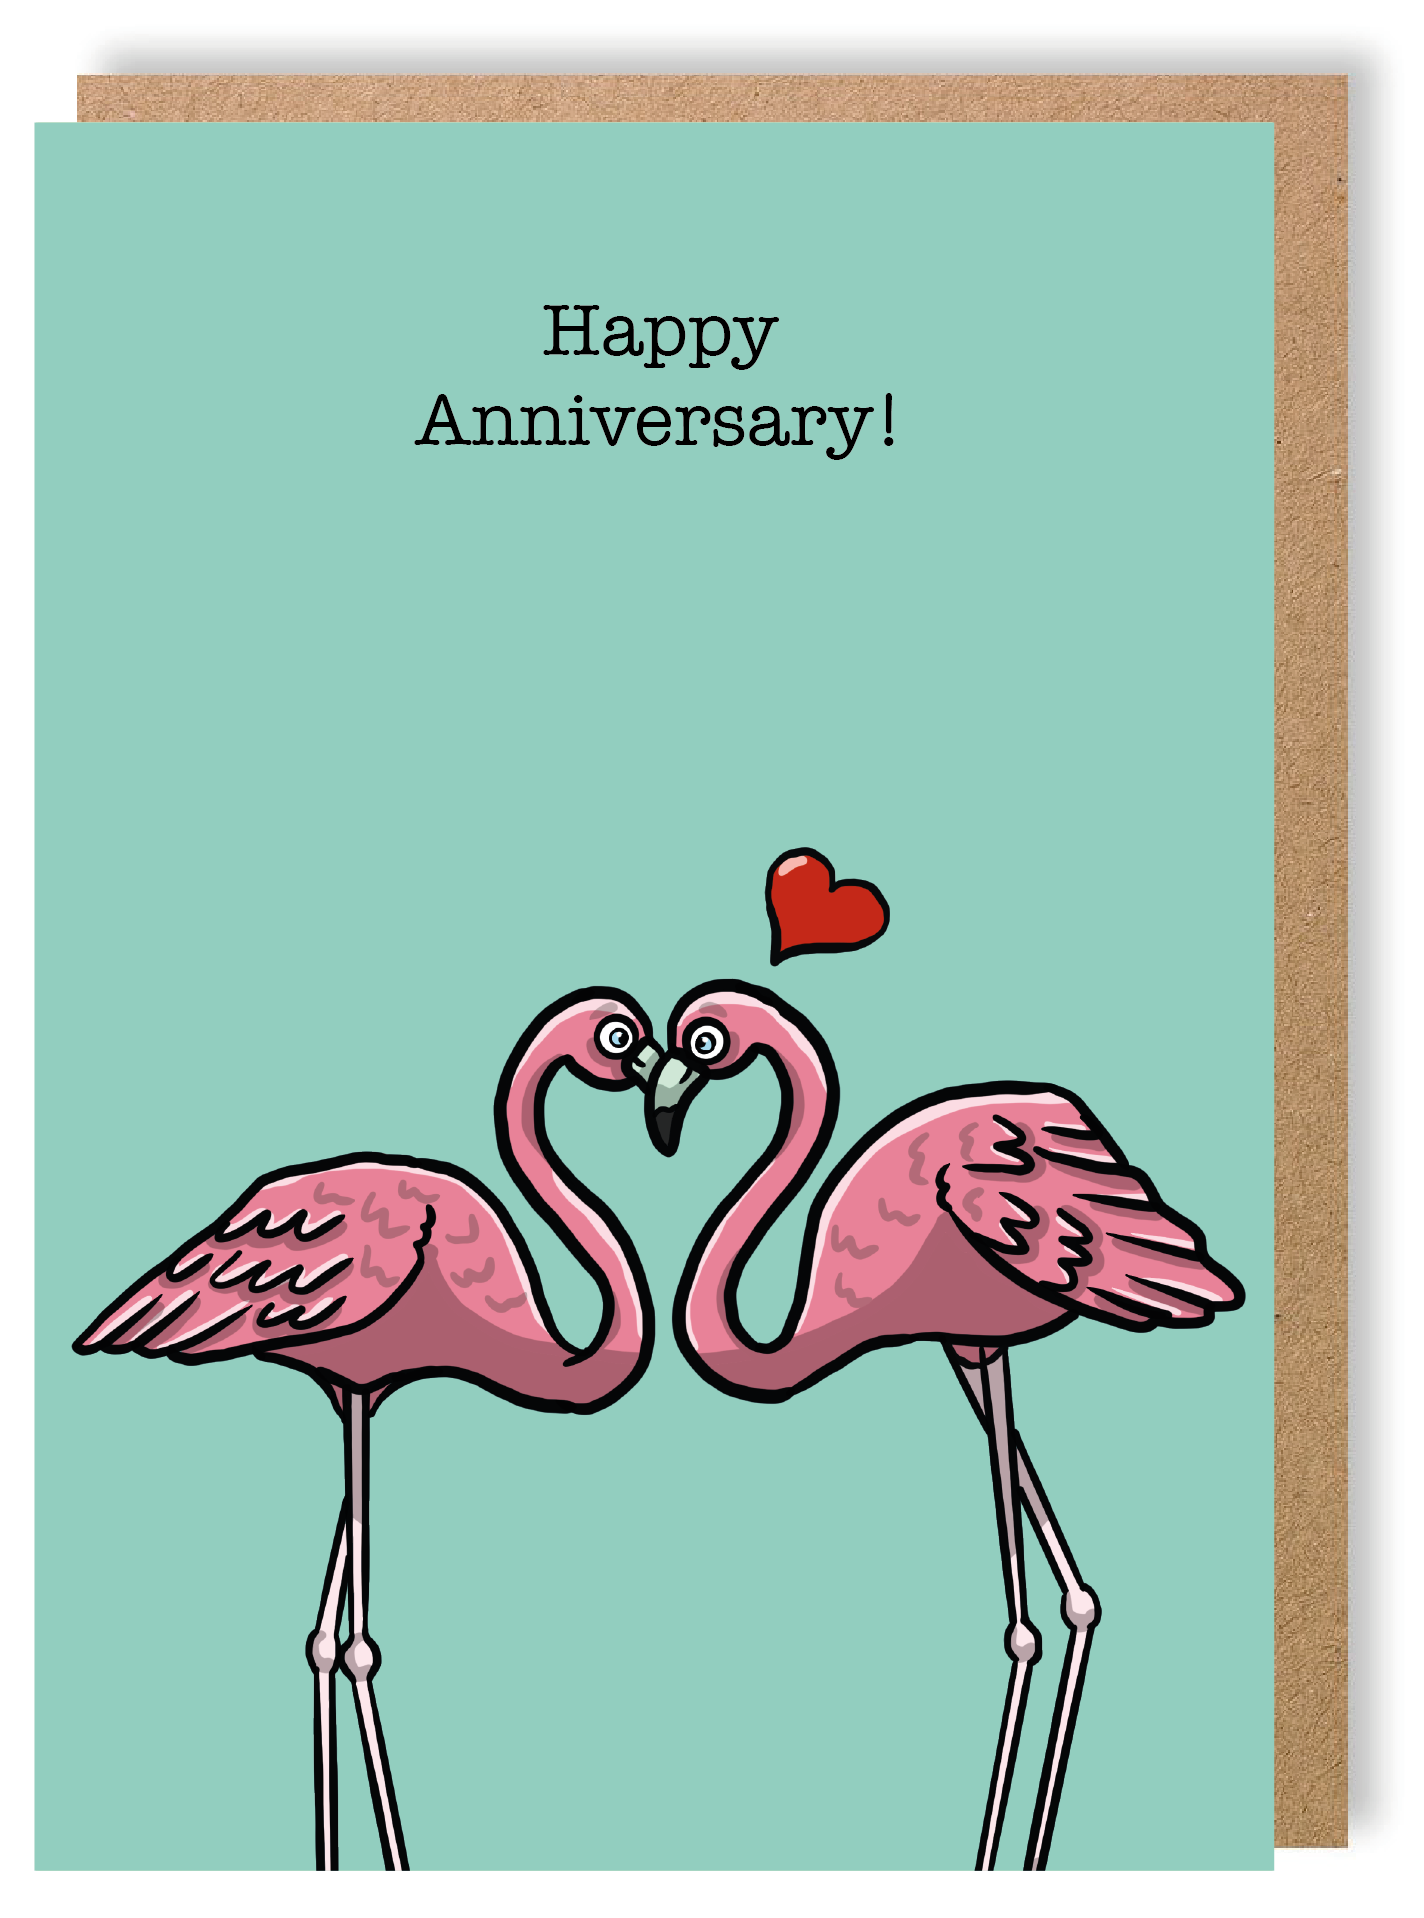 Happy Anniversary - Flamingo - Greetings Card - LukeHorton Art